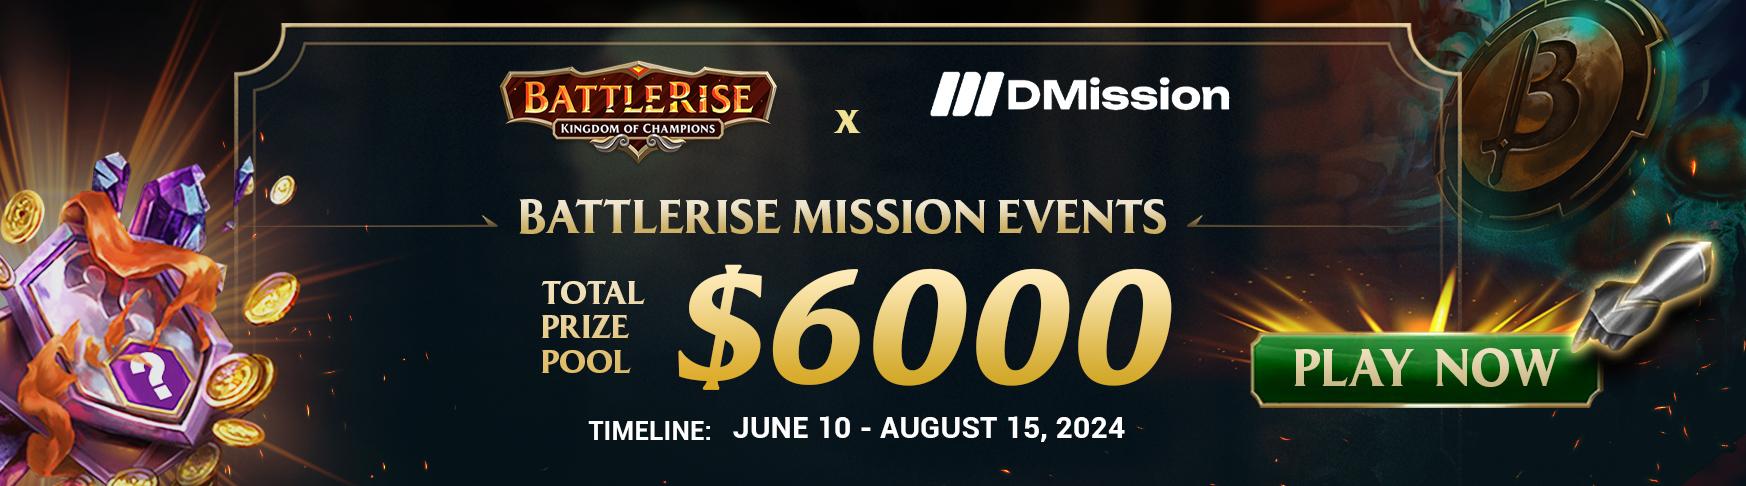 $6,000 BATTLERISE MISSION EVENTS